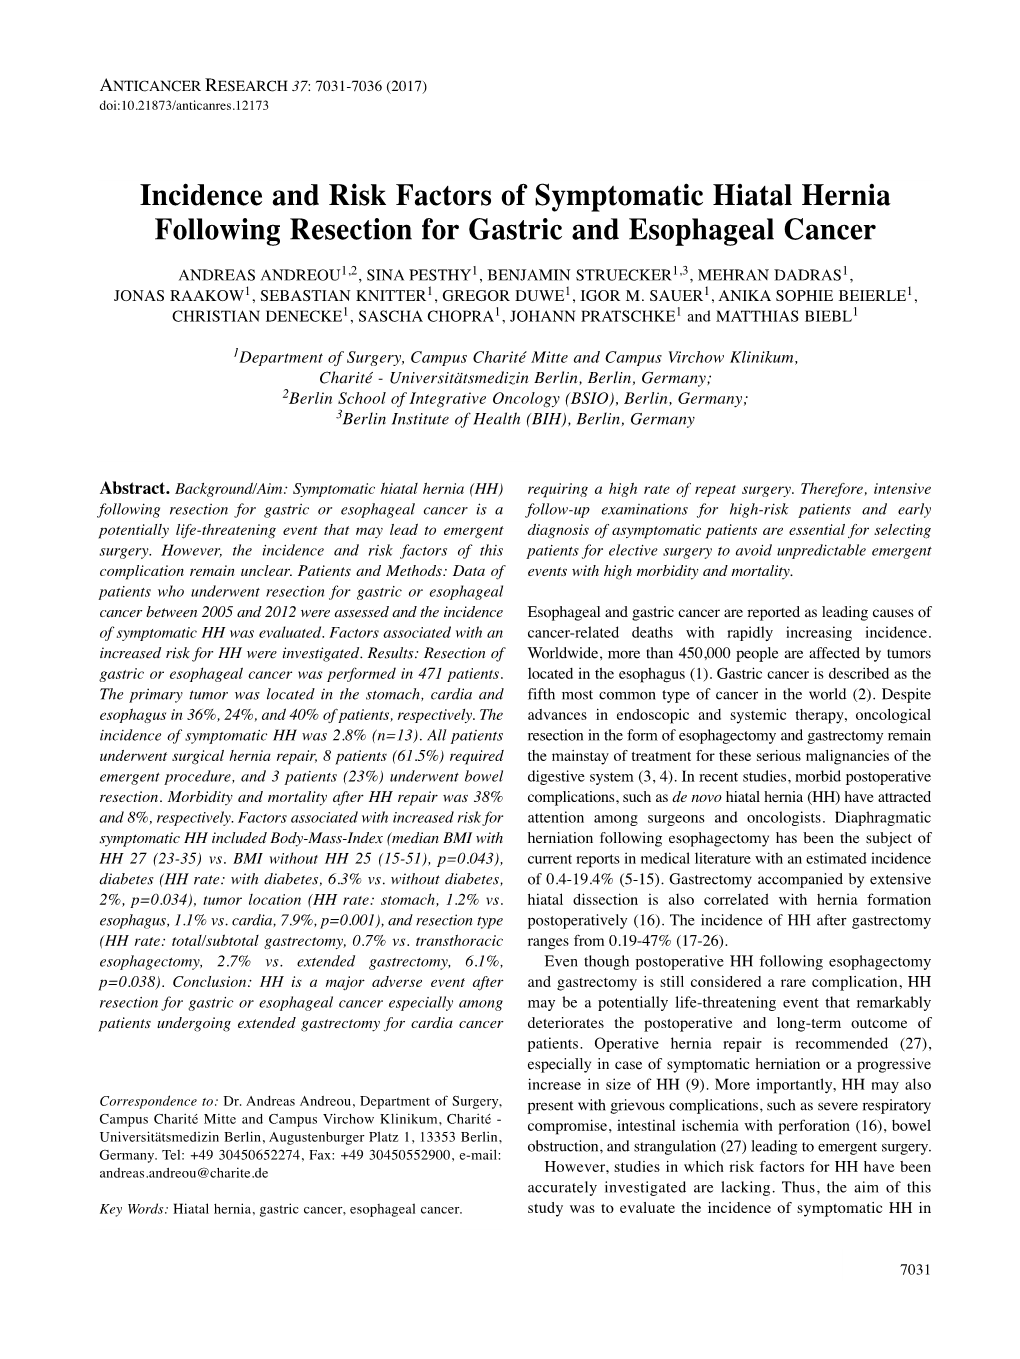 Incidence and Risk Factors of Symptomatic Hiatal Hernia